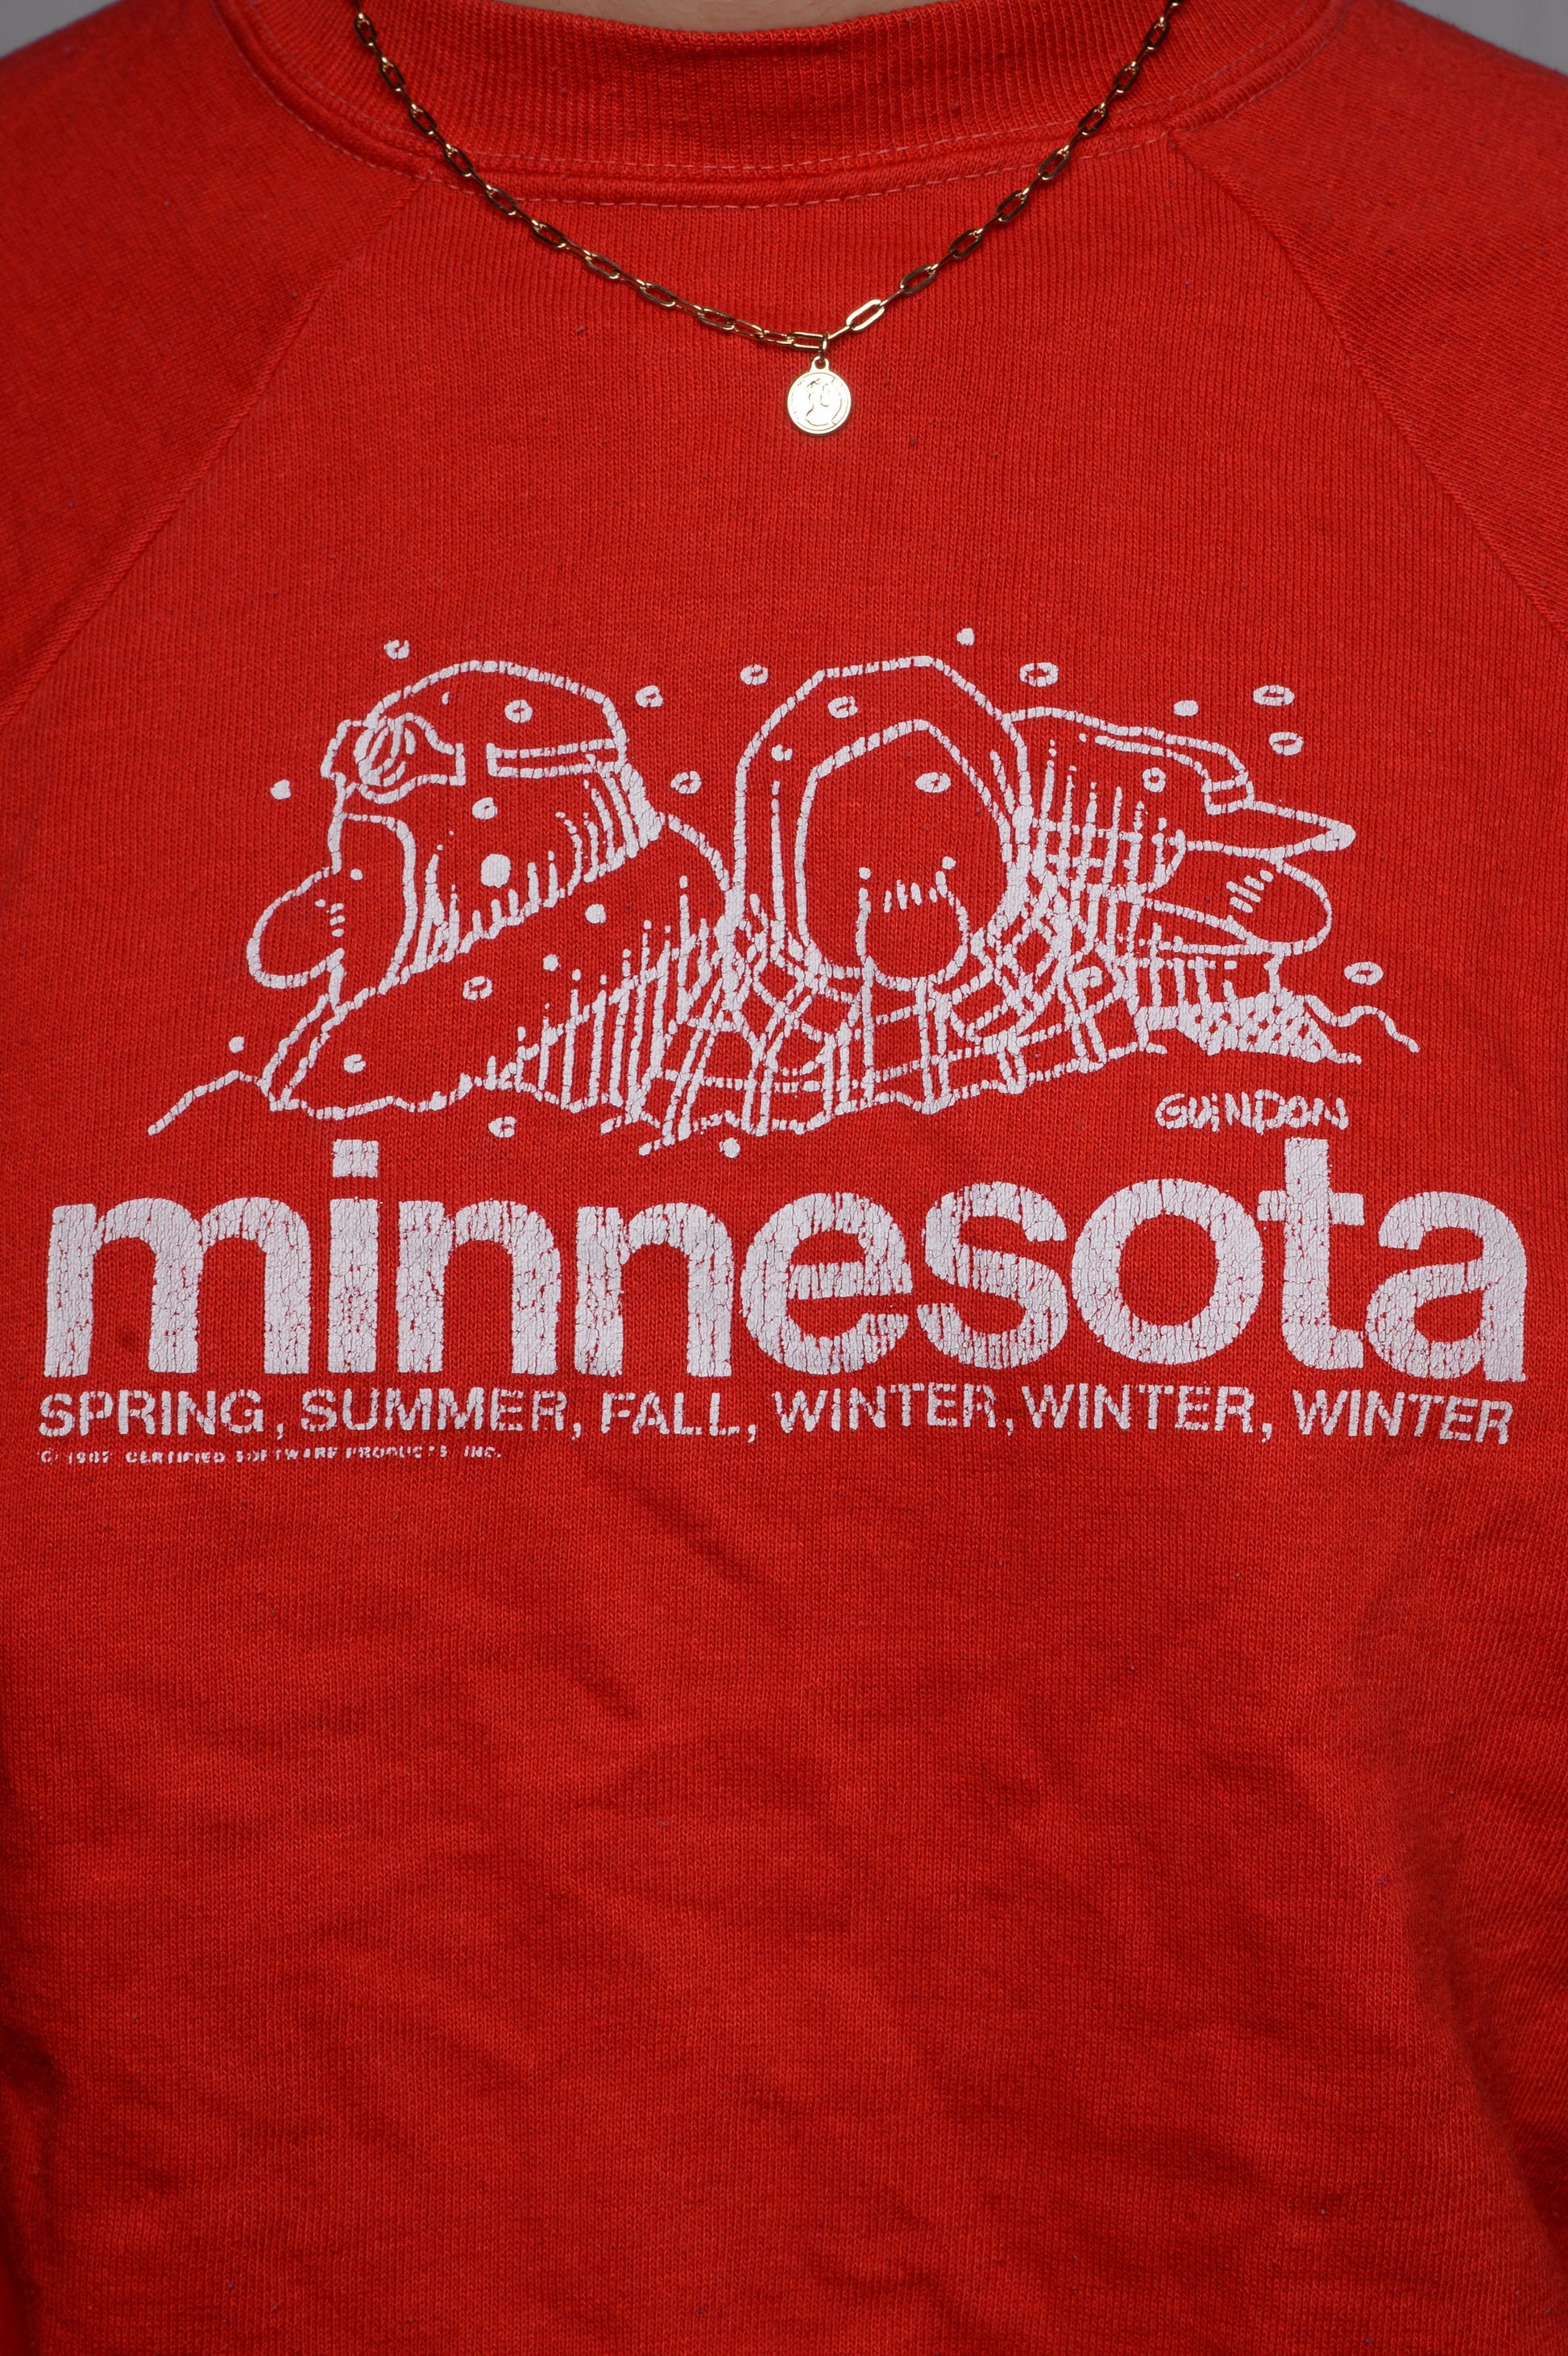 Crazy Soft Minnesota Sweatshirt